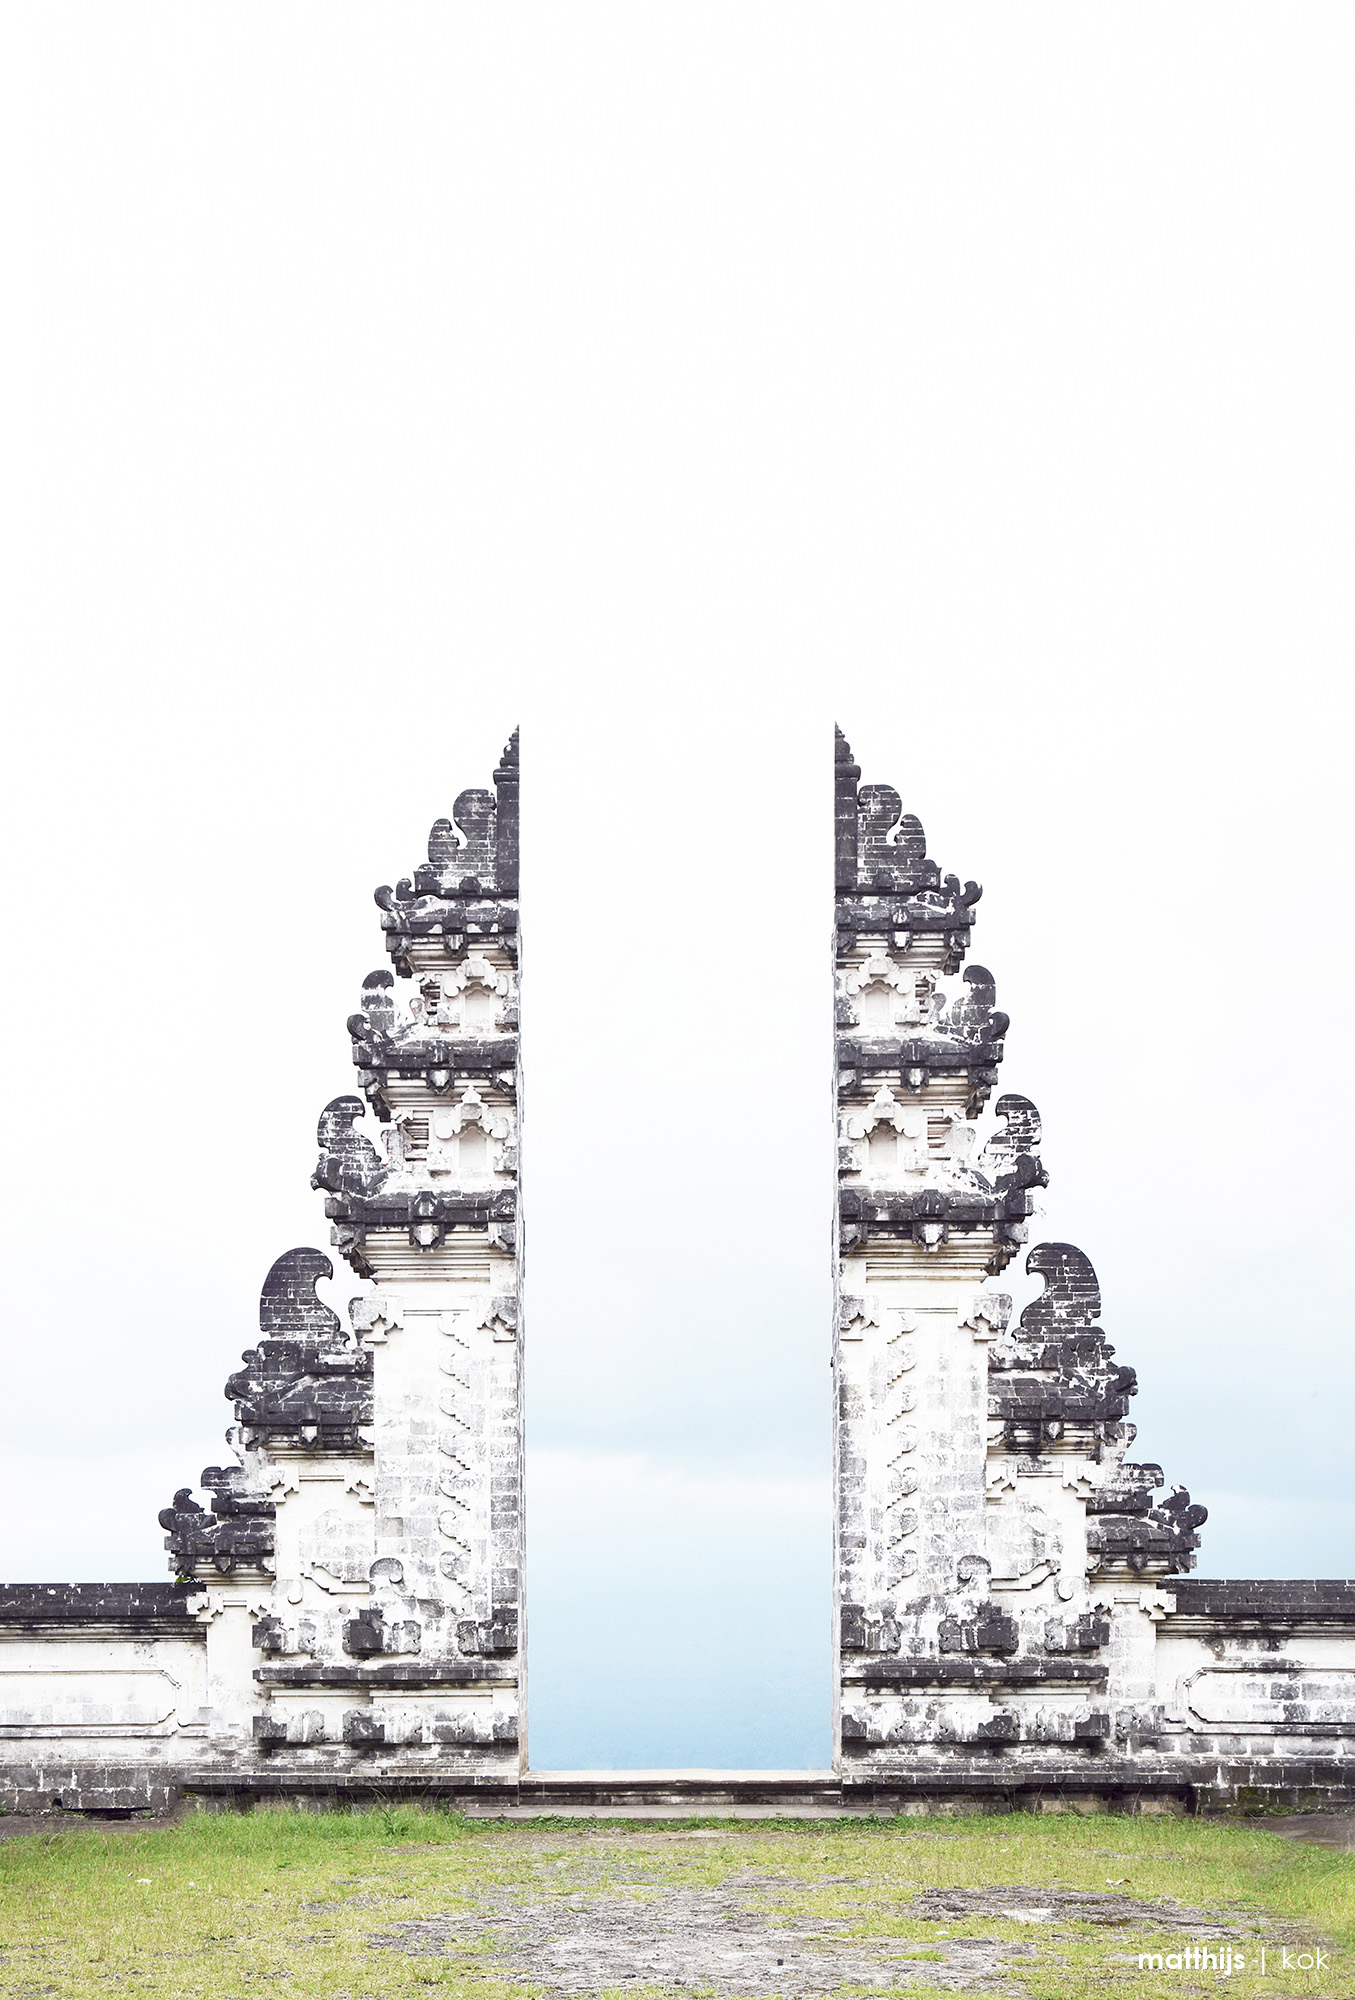 Heaven's Gate, Bali | Photo by Matthijs Kok